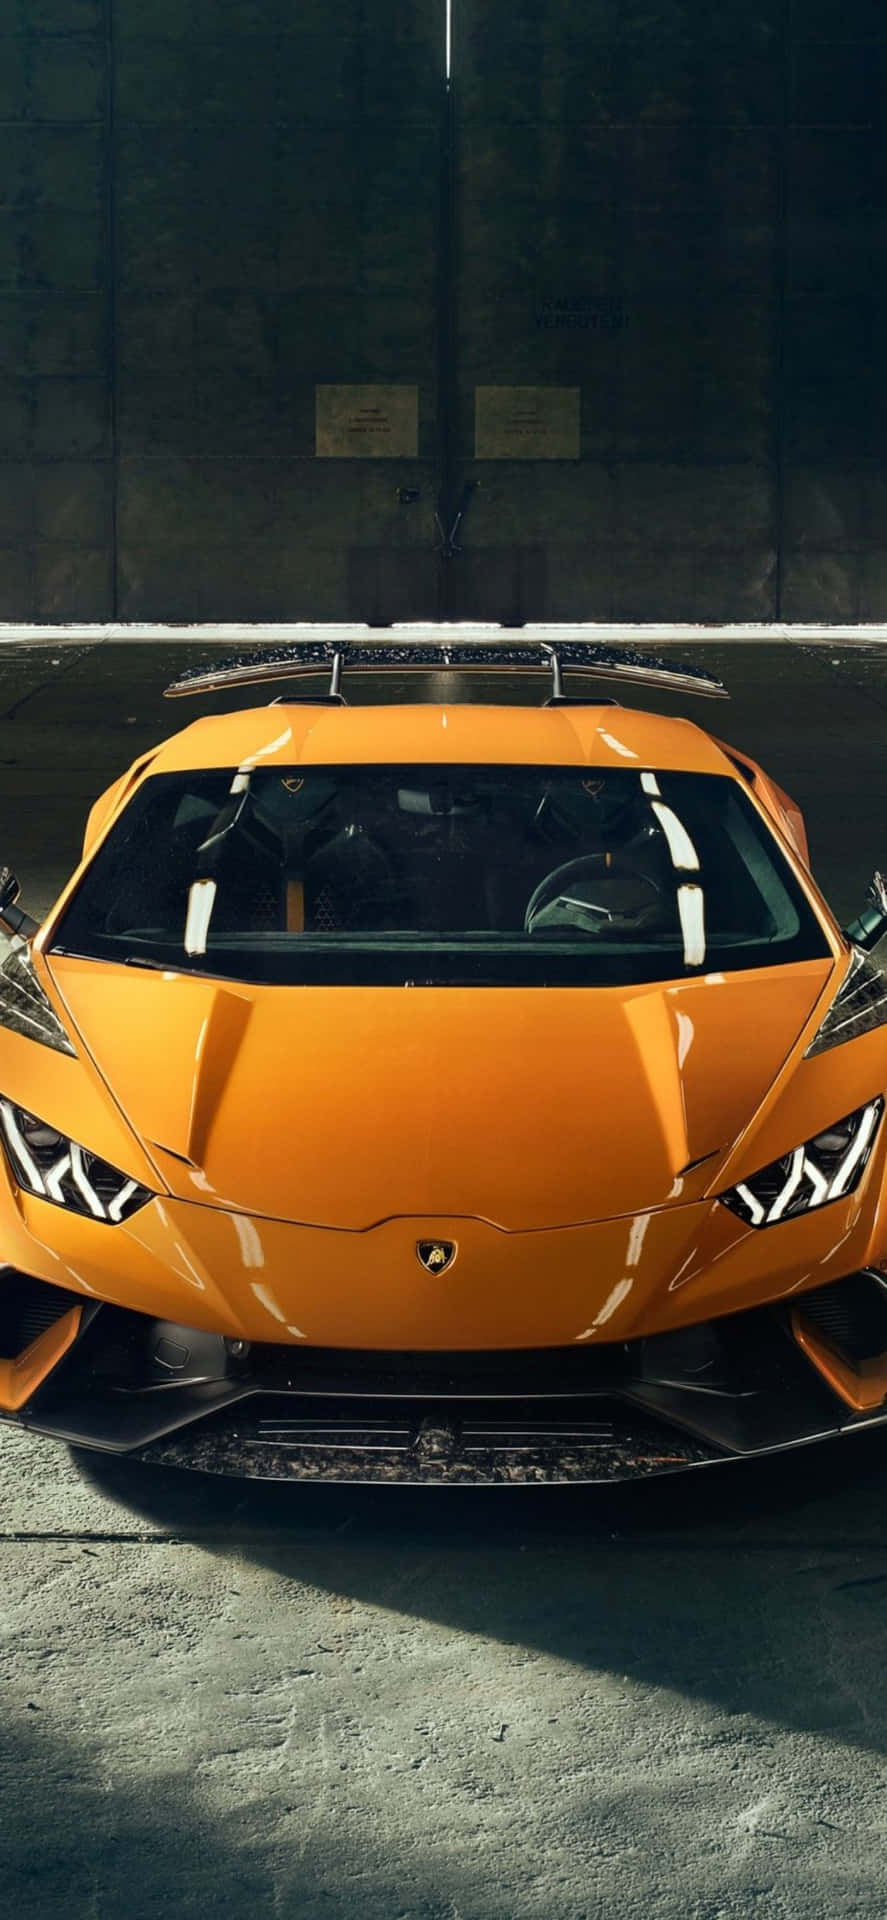 The Exquisite Lamborghini Sport, Now Available in Iphone X